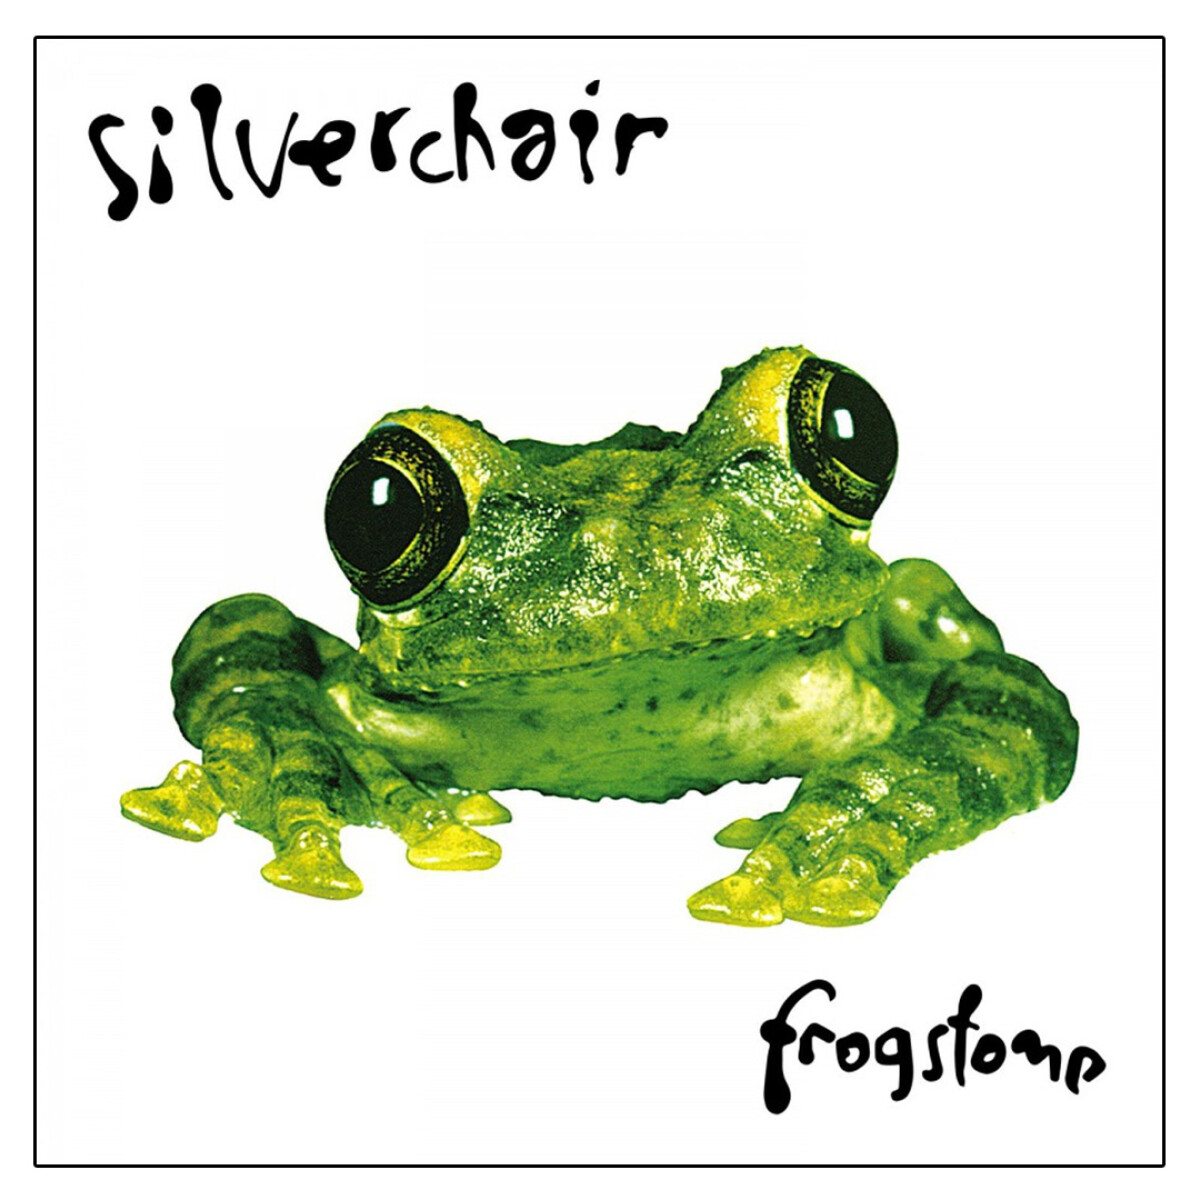 Silverchair - Frogstomp - Vinilo 